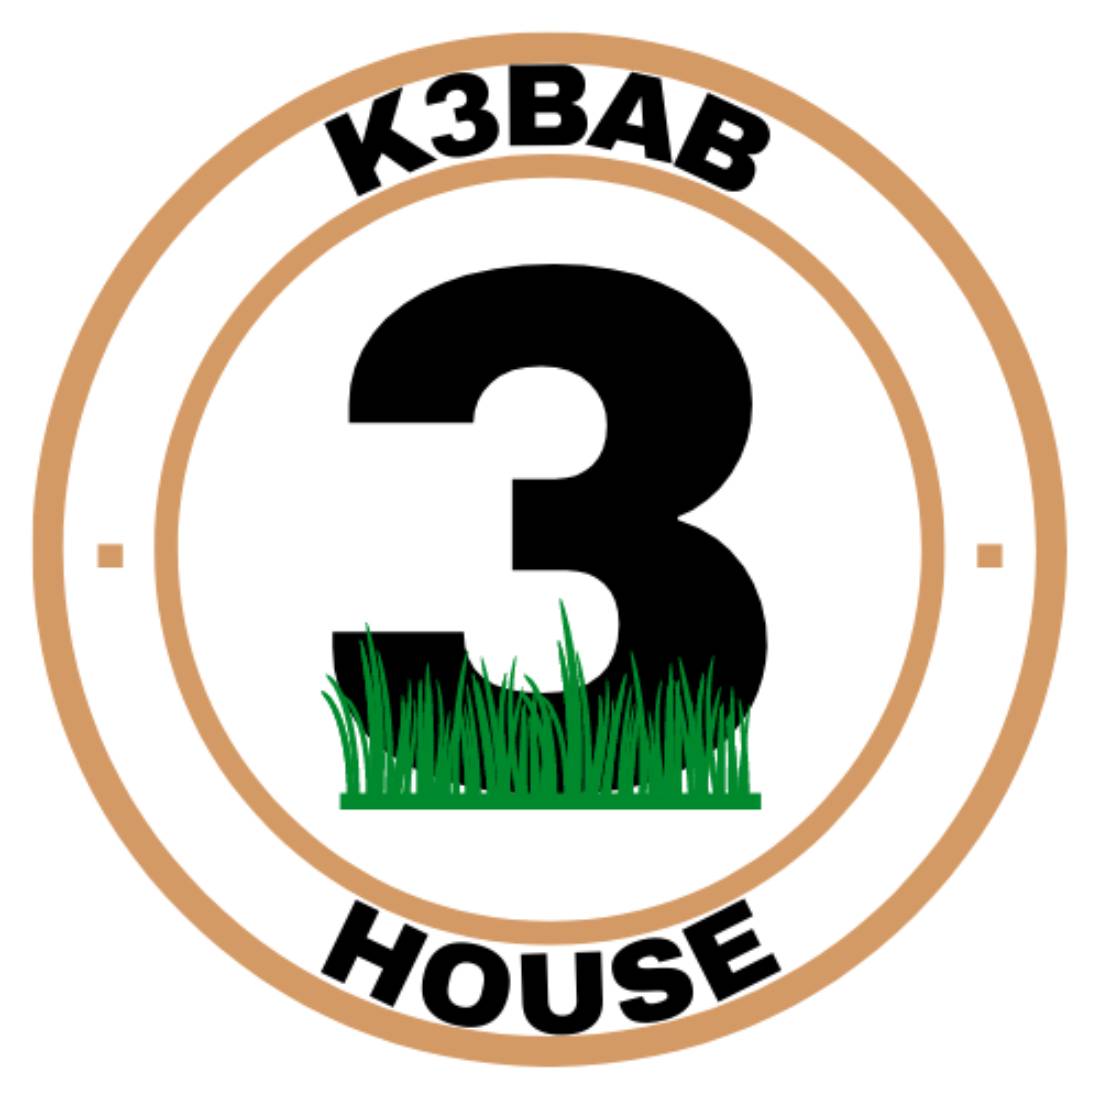 Fast Food Logo Kebab House Design cover image.